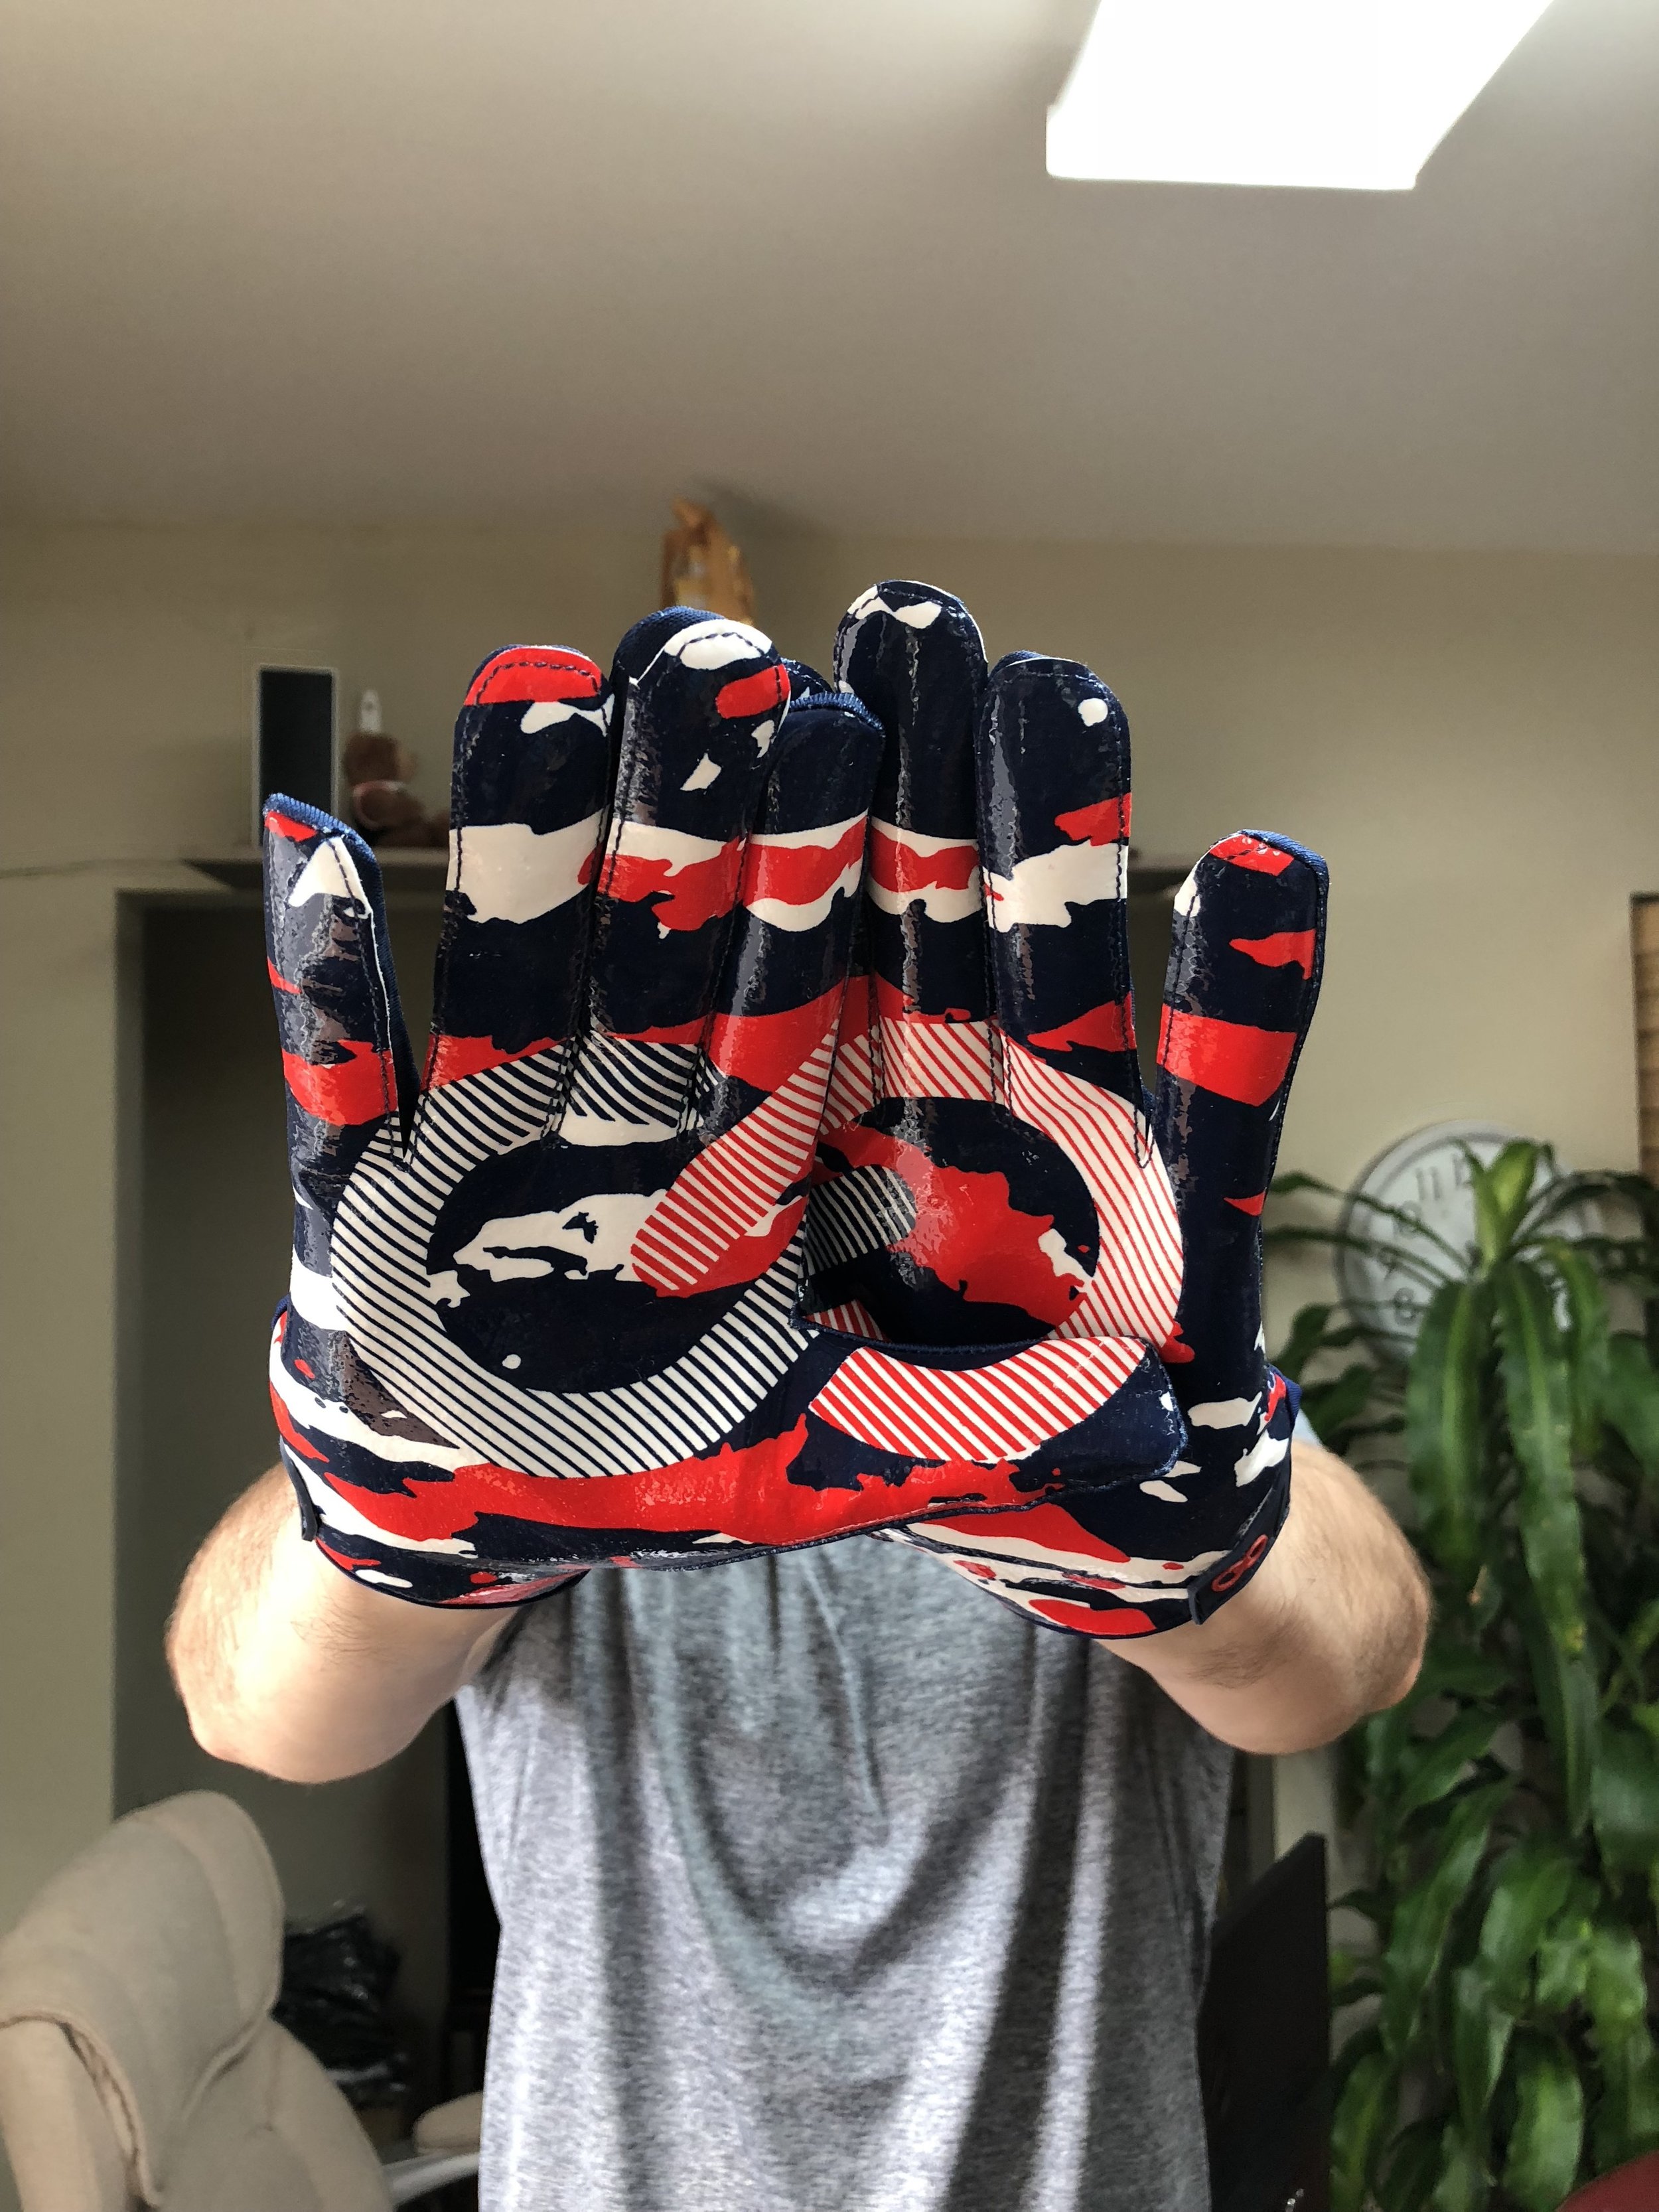 custom football gloves adidas